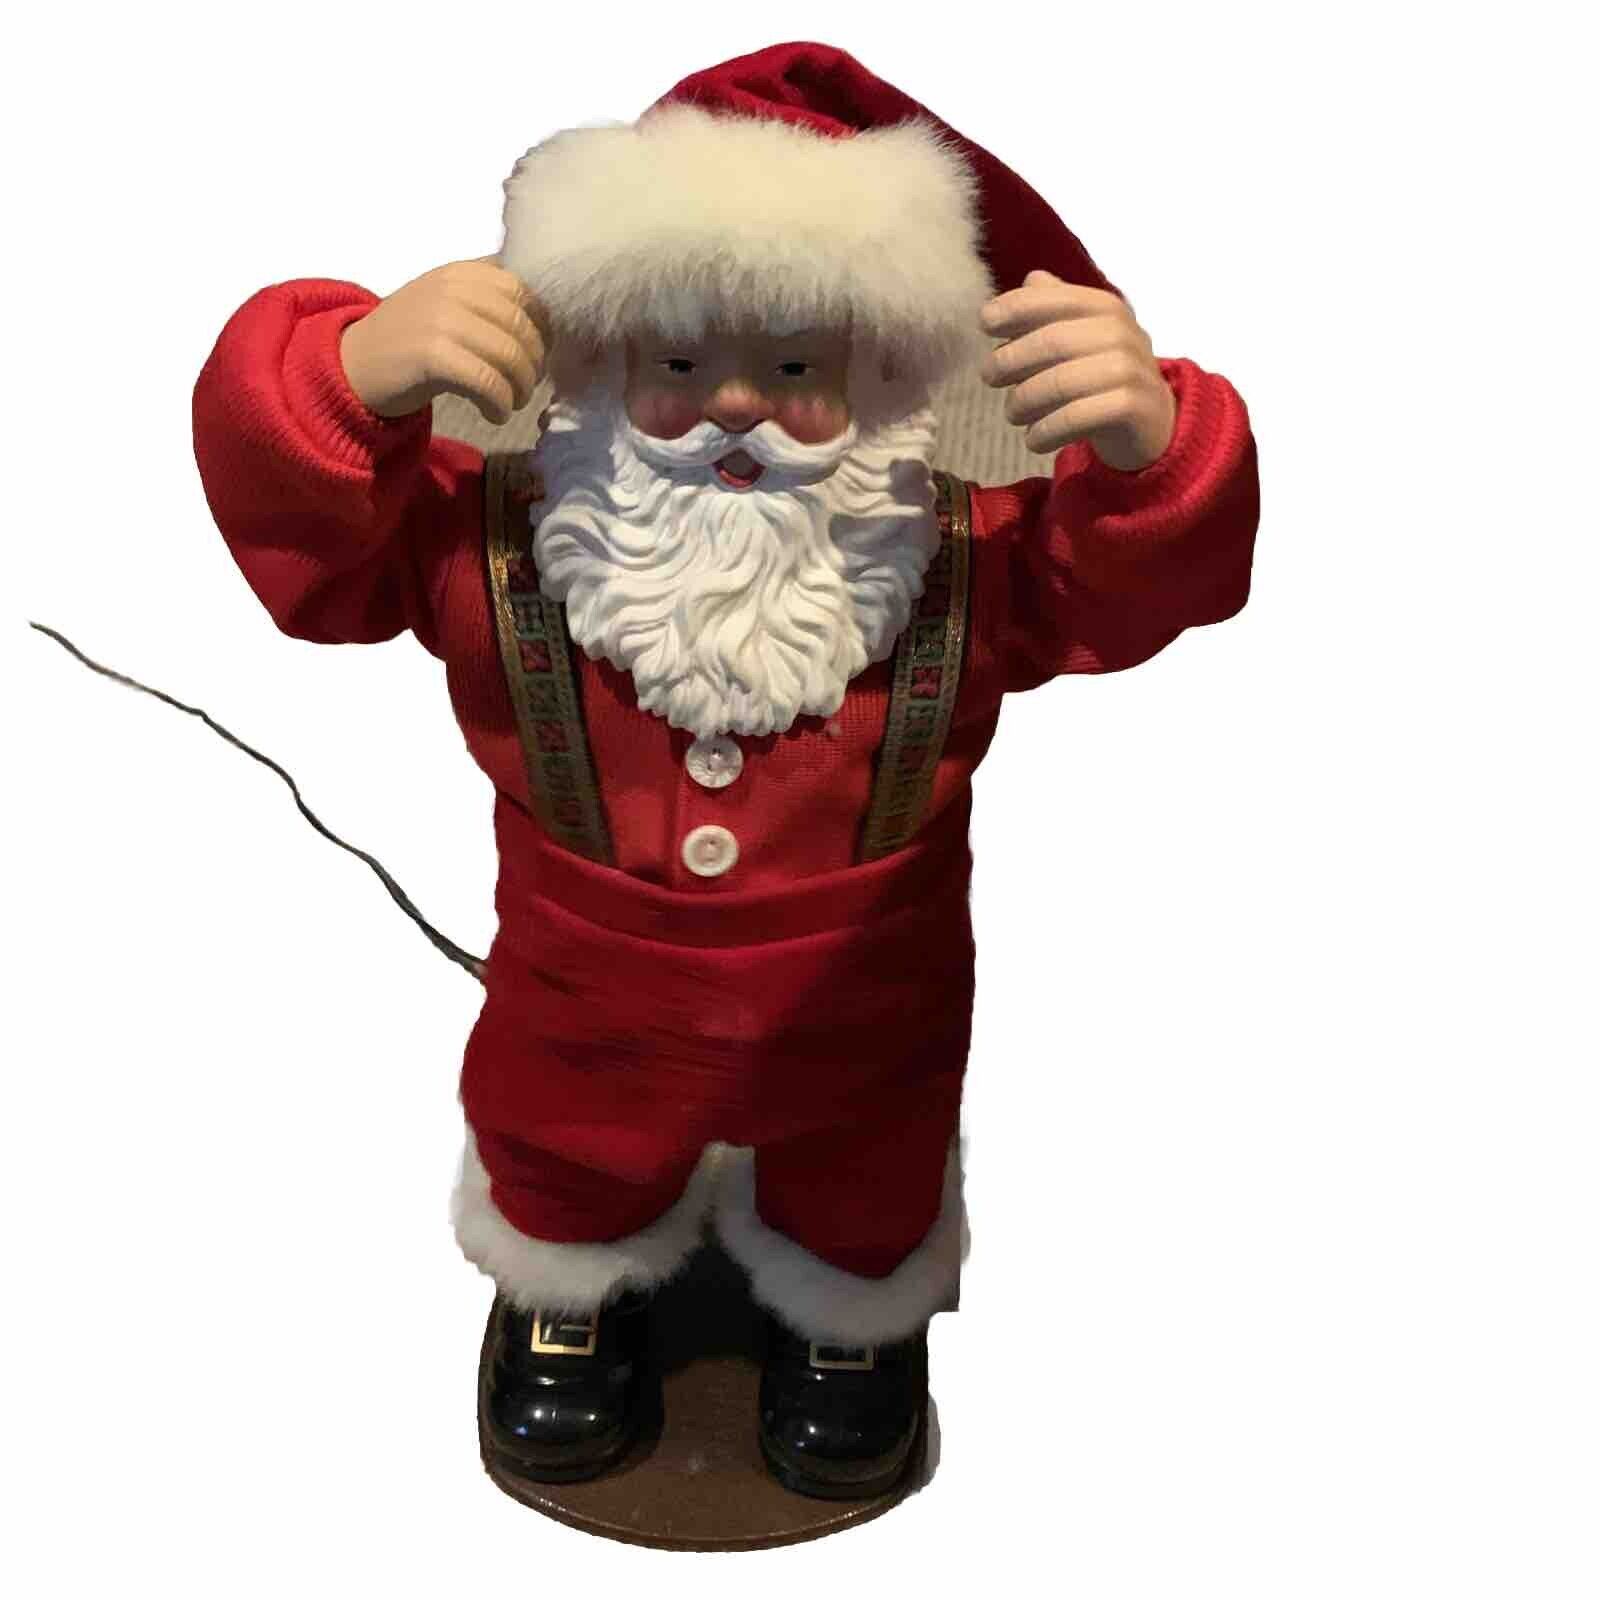 Vtg Jingle Bell Rock Santa Claus Animated Dancing Musical 1998 Tested Works